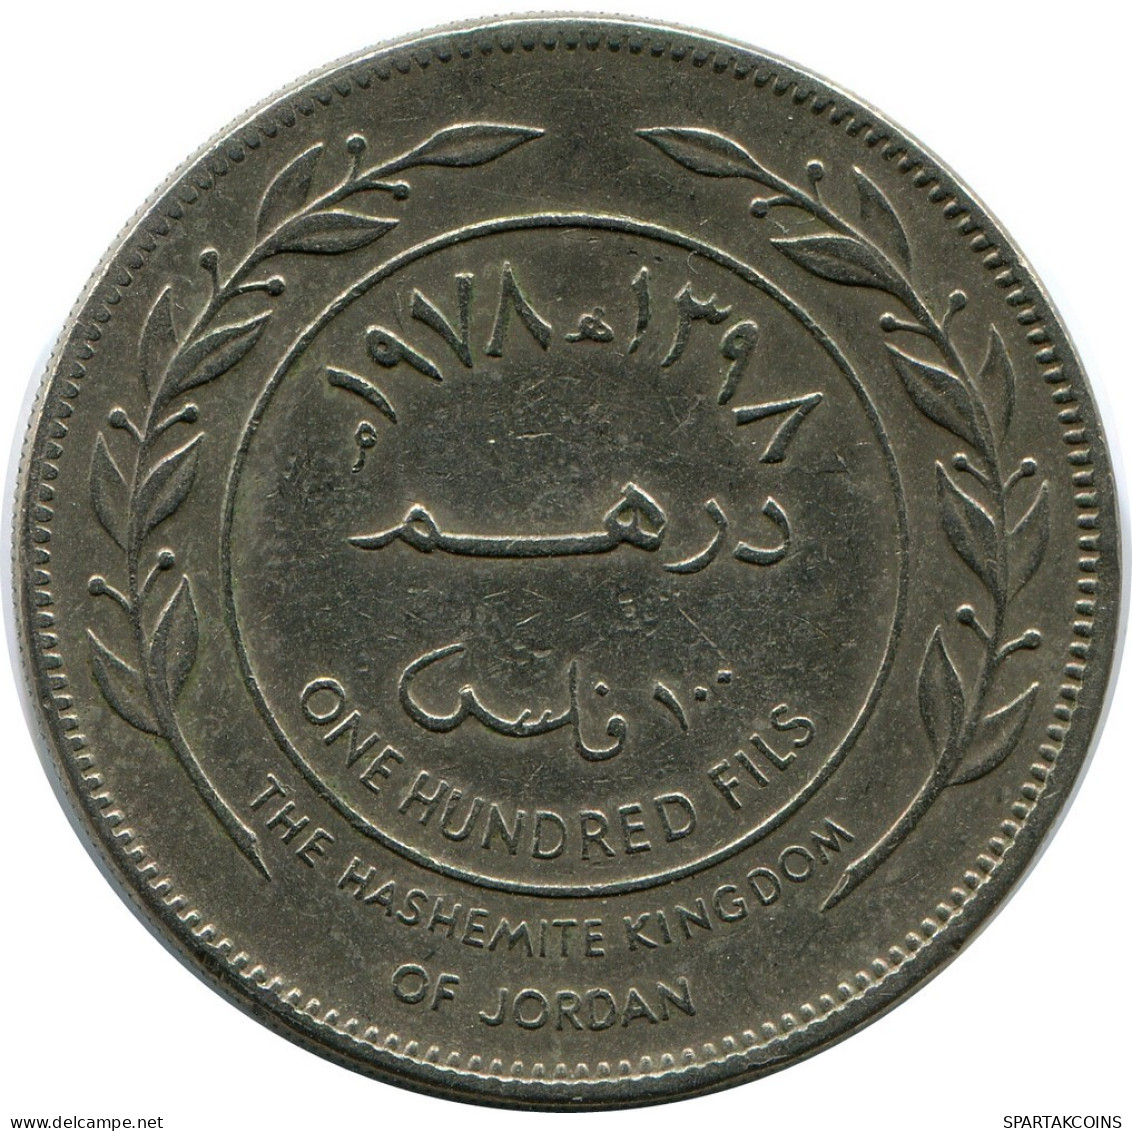 1 DIRHAM / 100 FILS 1978 JORDANIA JORDAN Islámico Moneda #AR008.E.A - Jordania